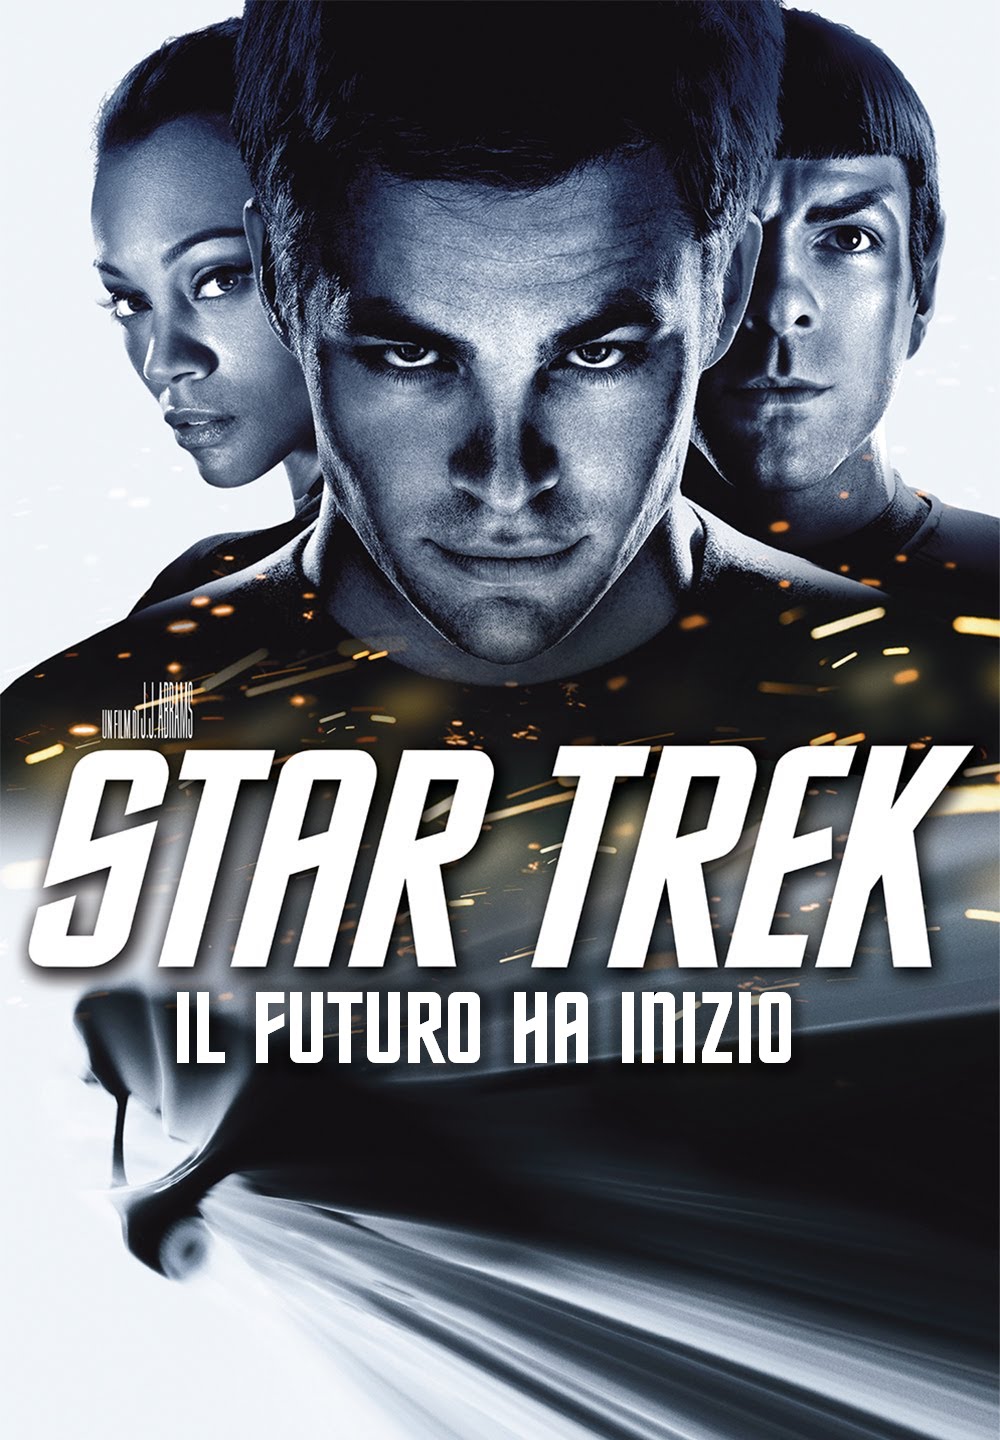 Star Trek XI – Il futuro ha inizio [HD] (2009)